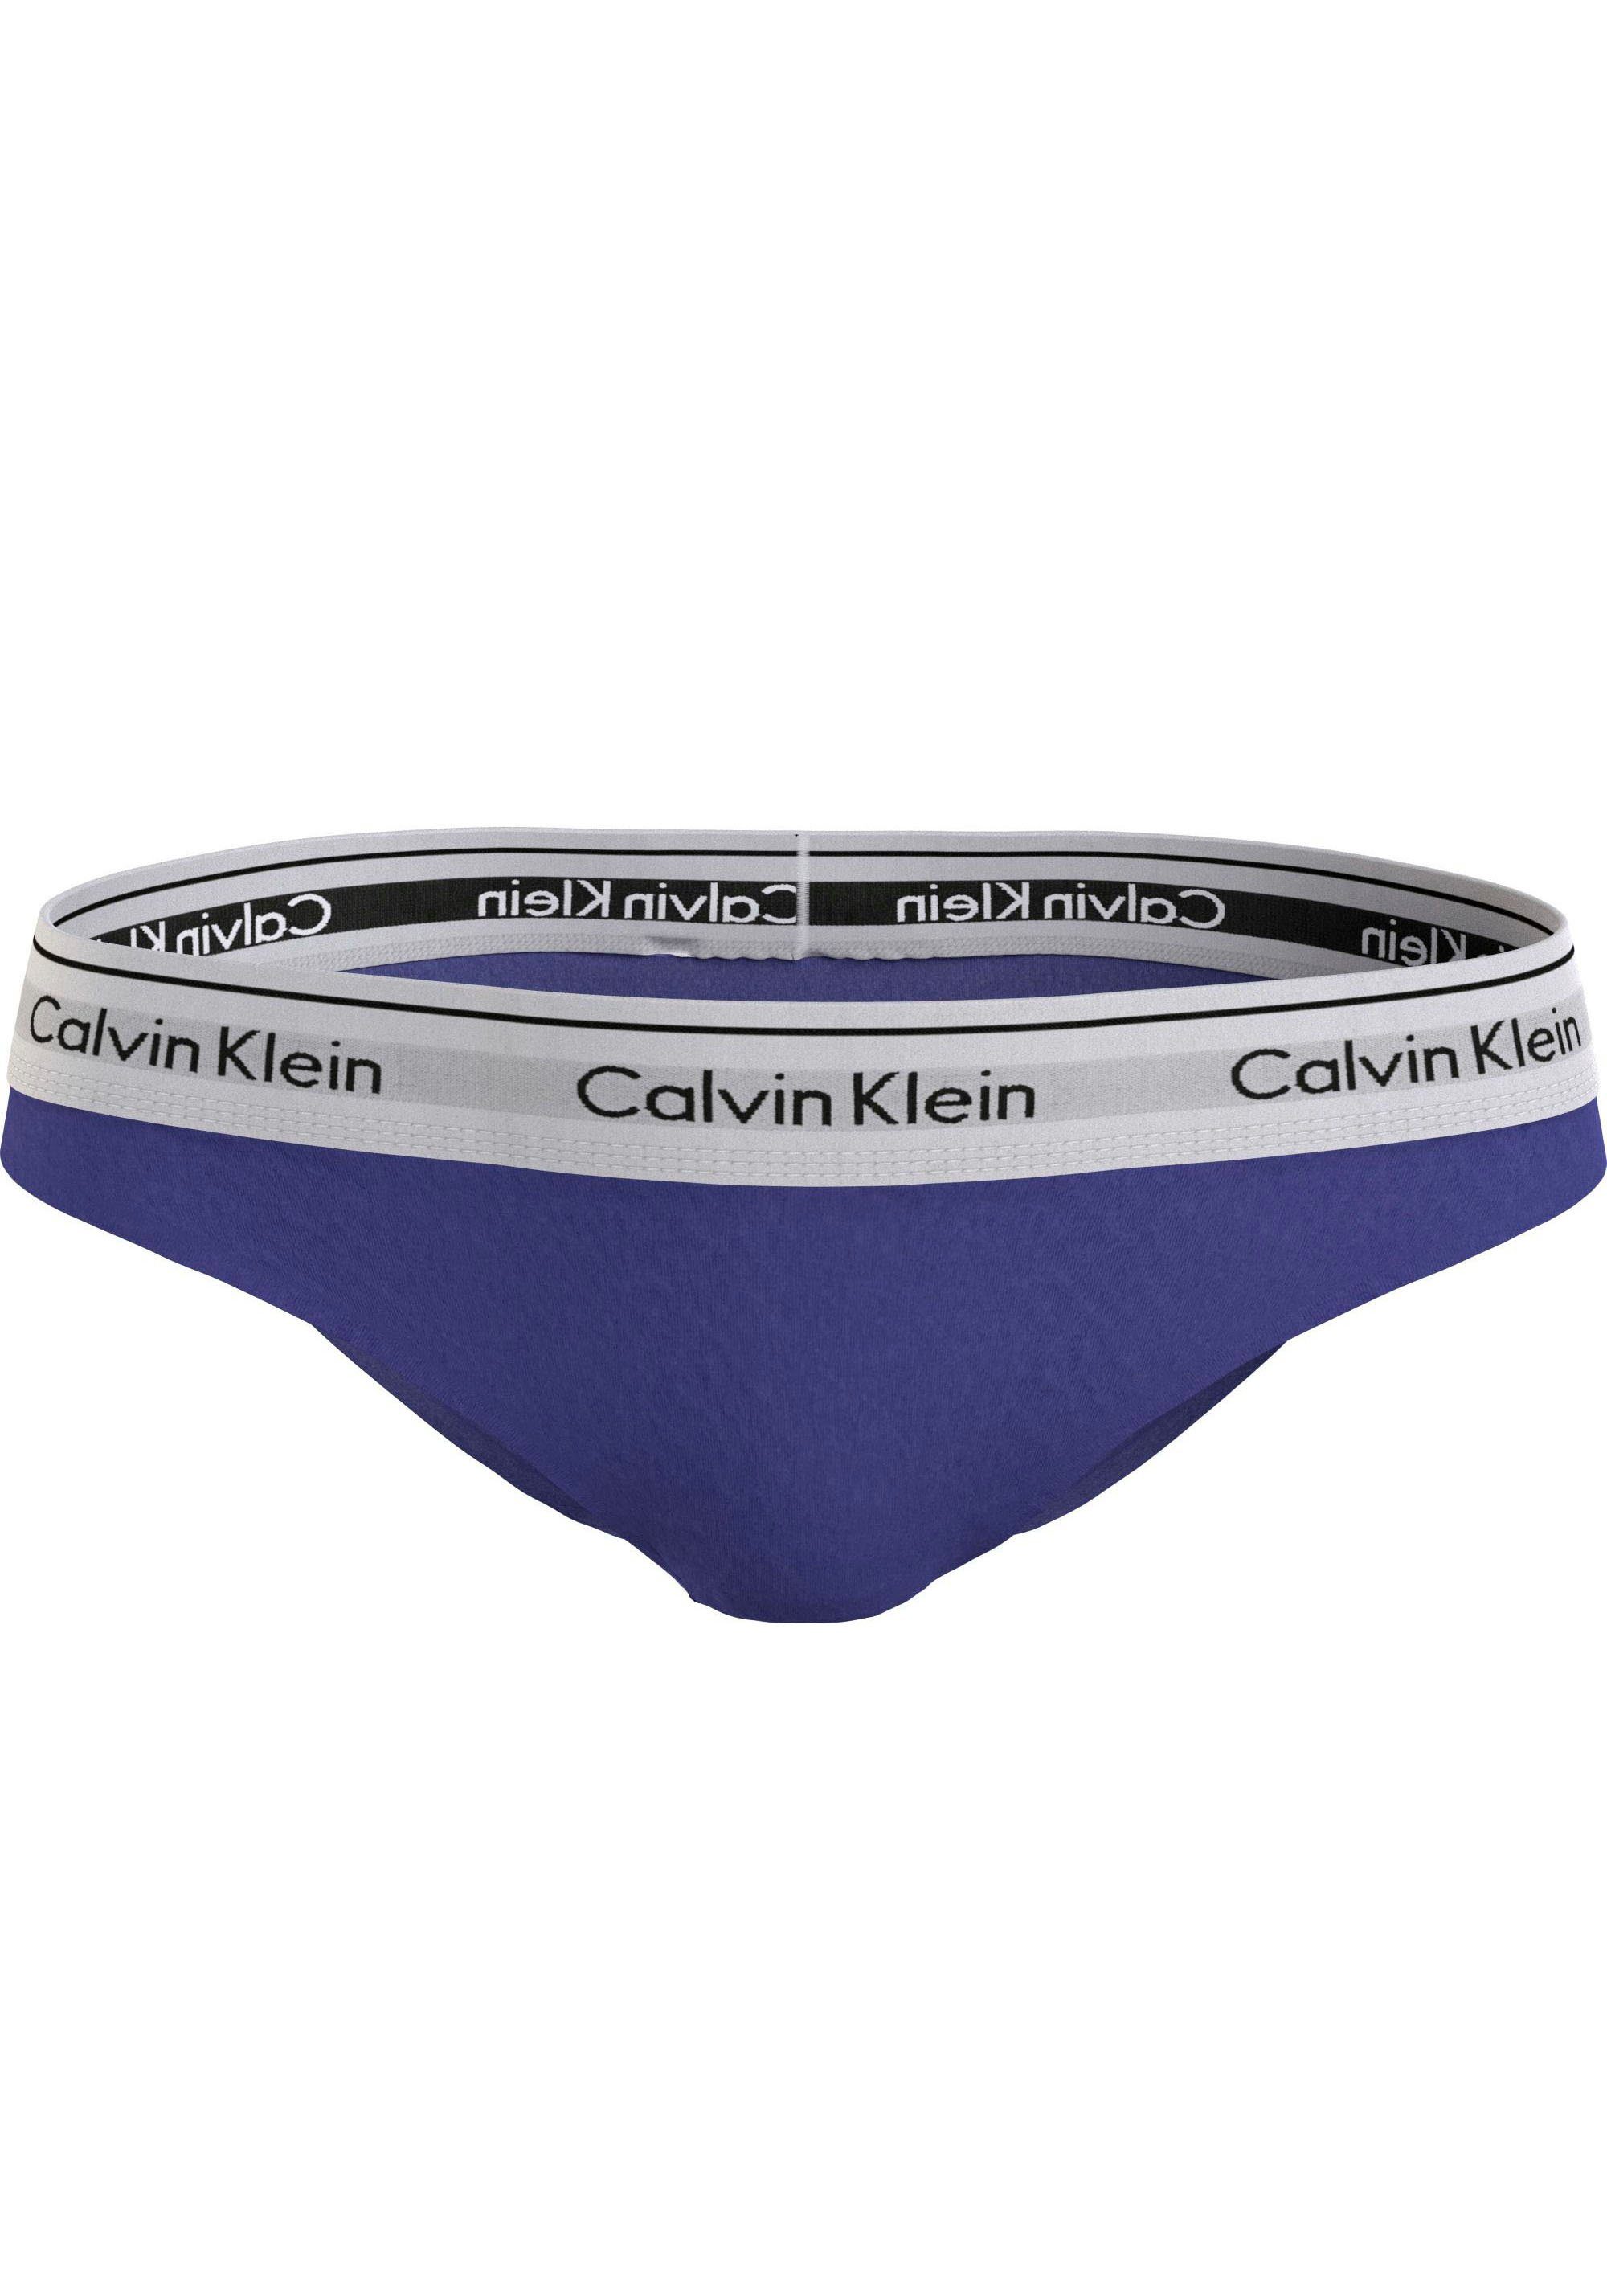 Spitzenklasse Calvin Klein Underwear Bikinislip mit blau Logo BIKINI klassischem